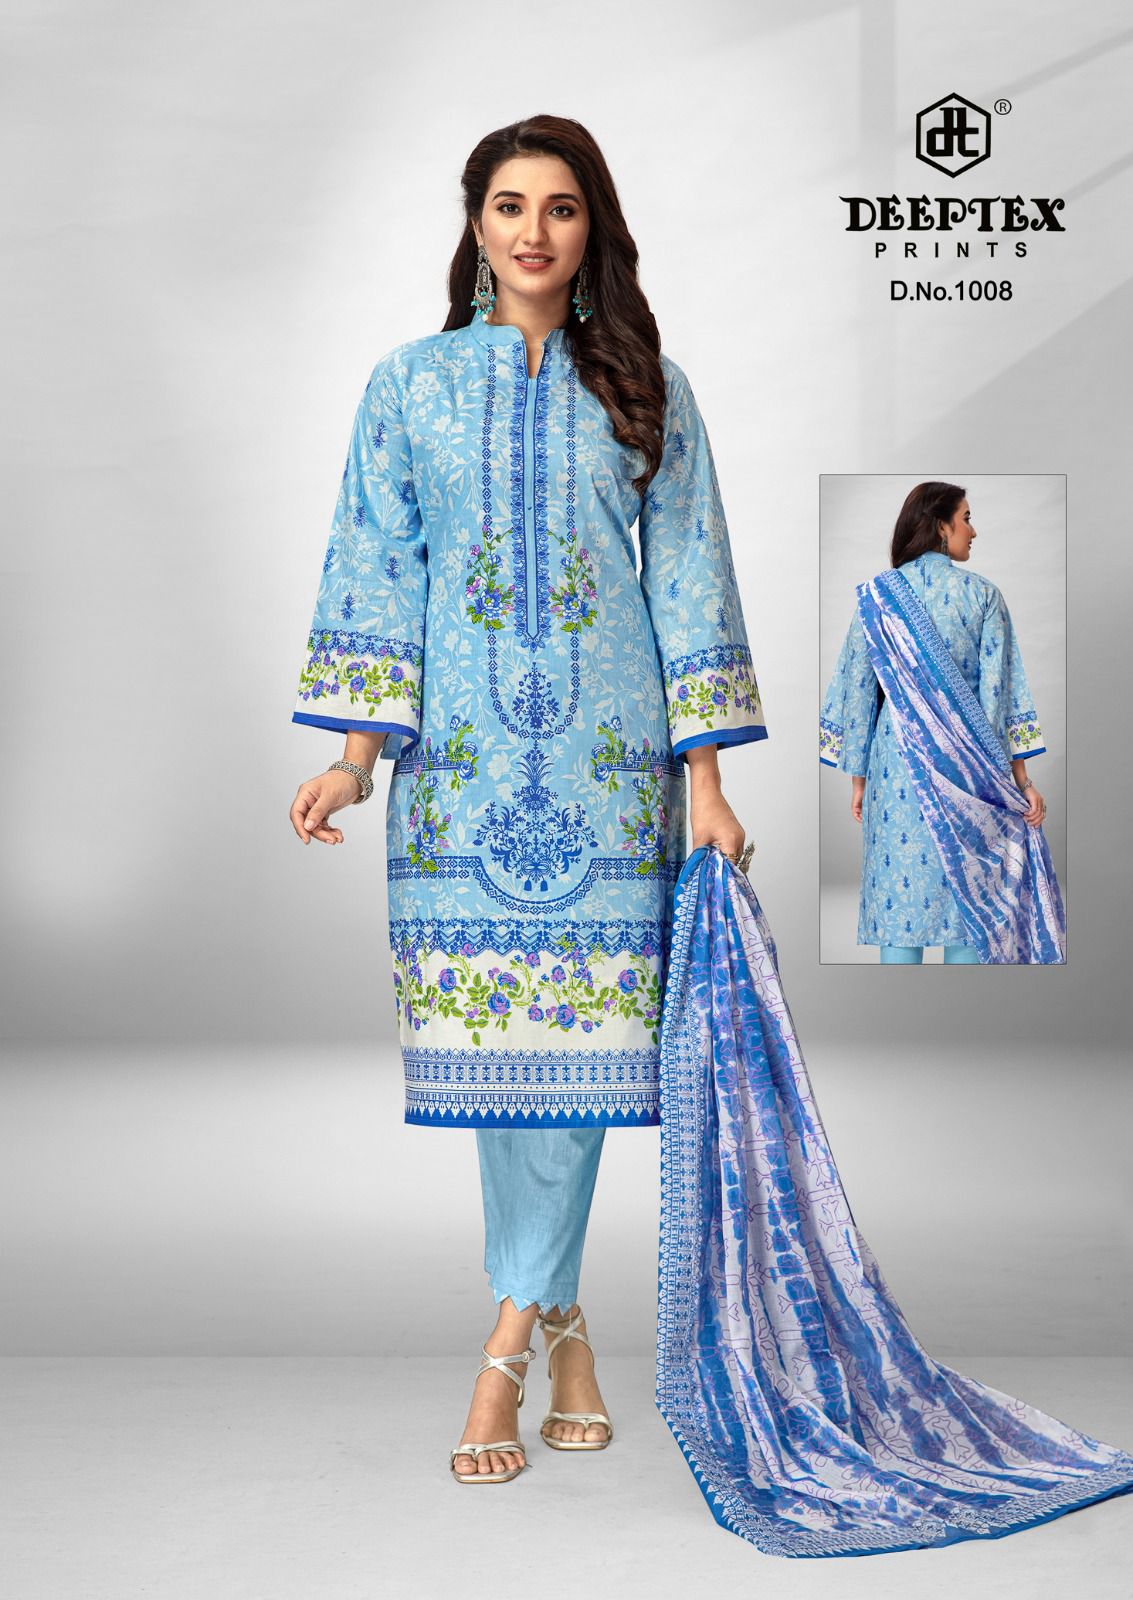 Roohi Zara Vol 1 Deeptex Prints Poplin Cotton Karachi Salwar Suits